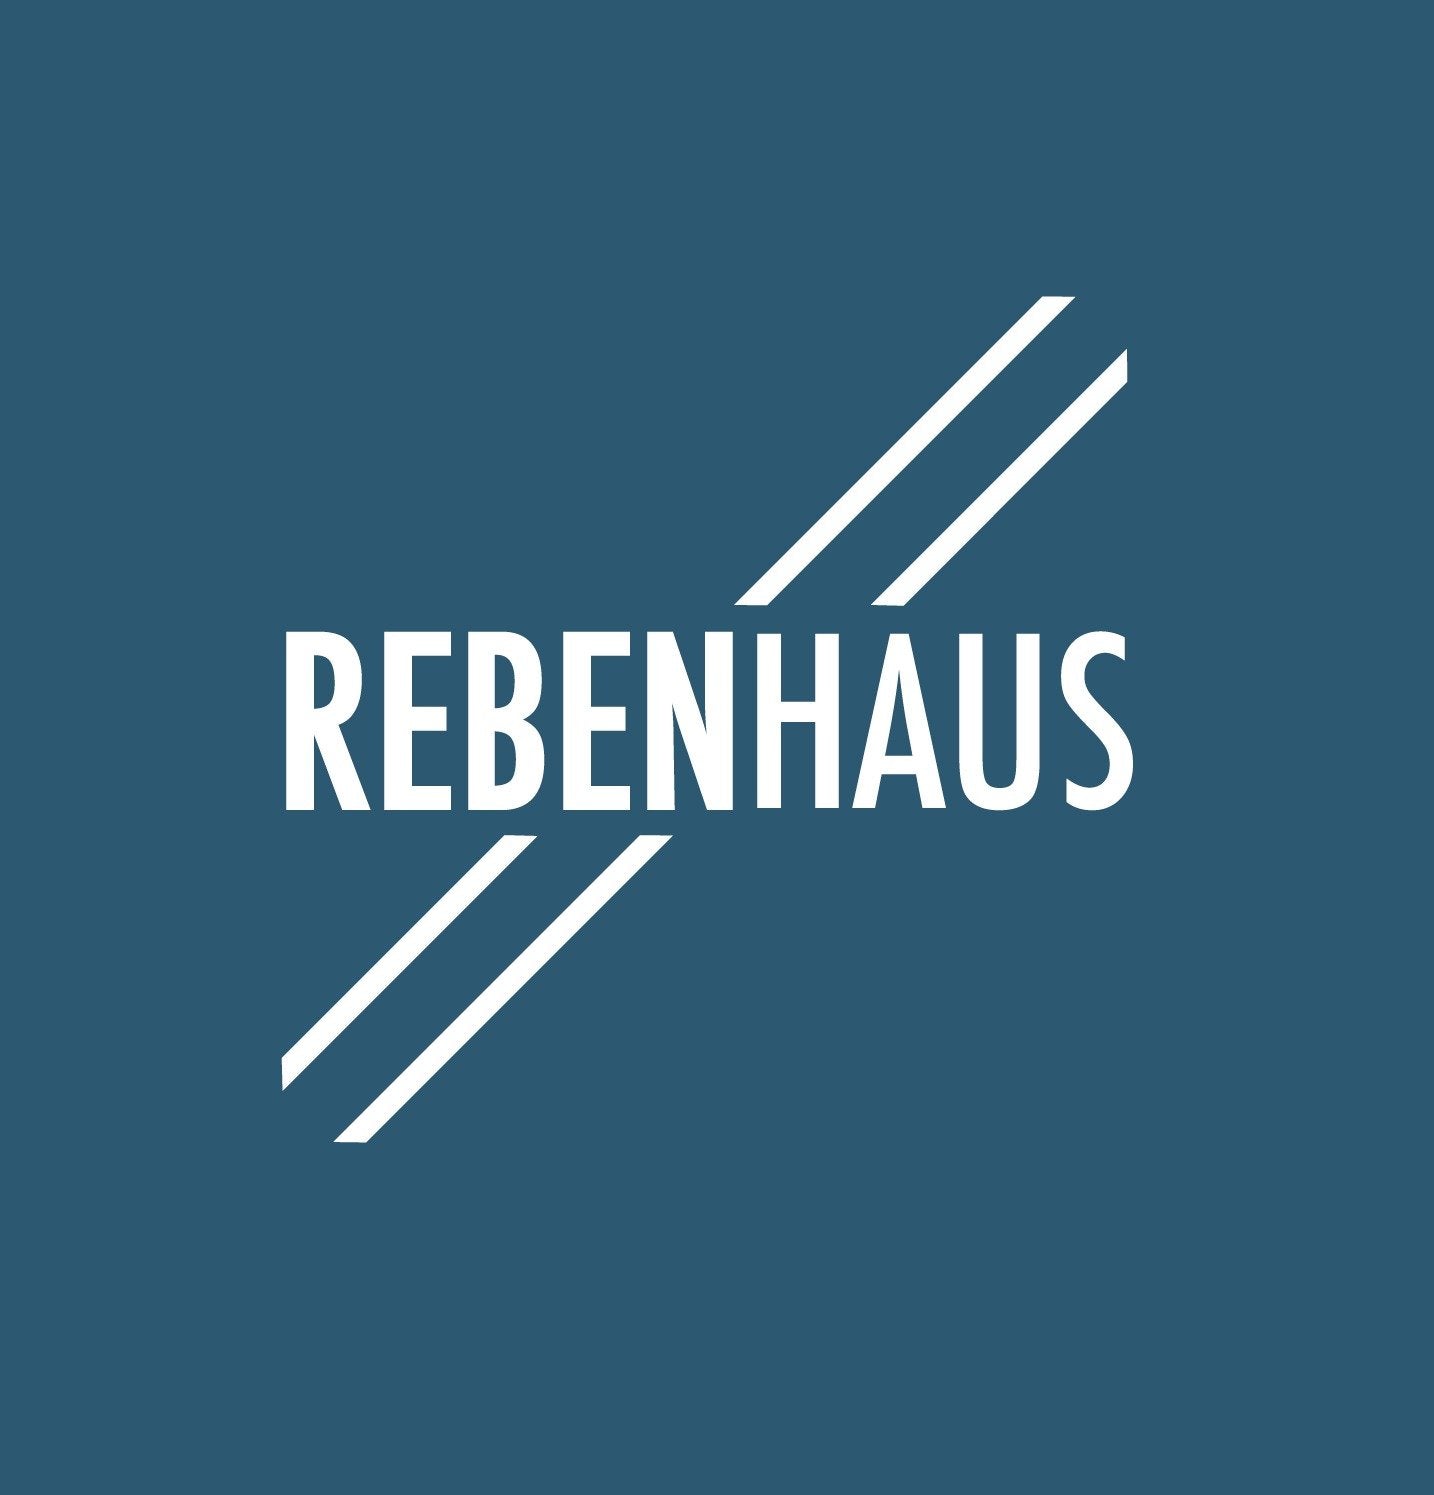 Rebenhaus